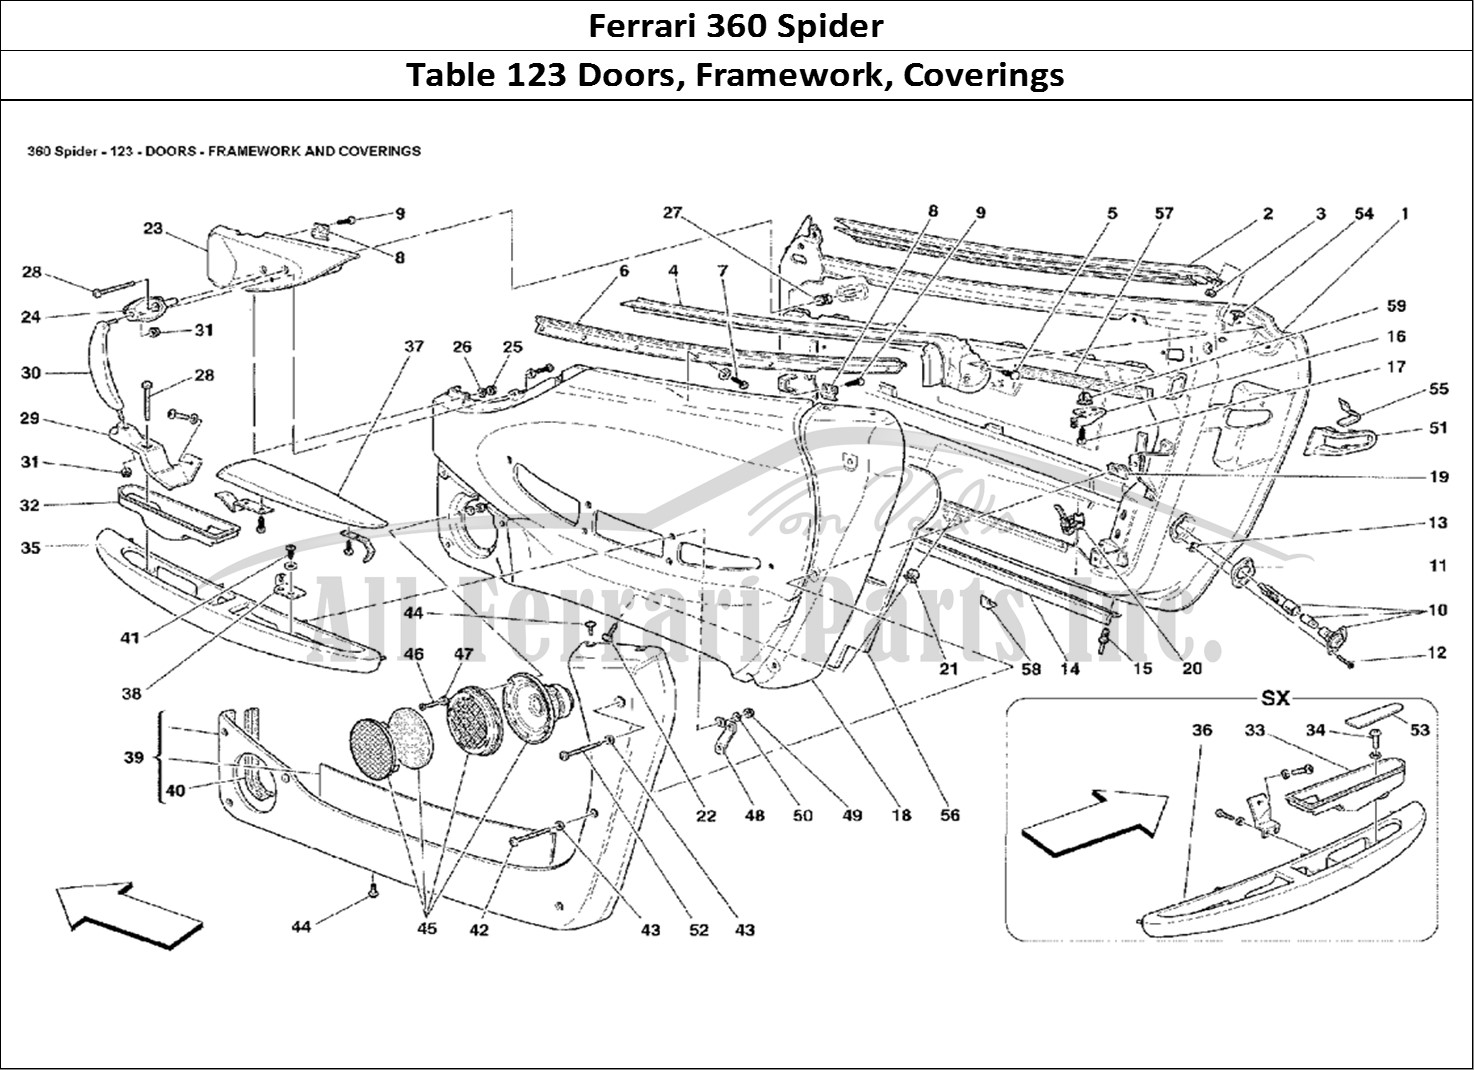 Ferrari Parts Ferrari 360 Spider Page 123 Doors - Framework and Cov